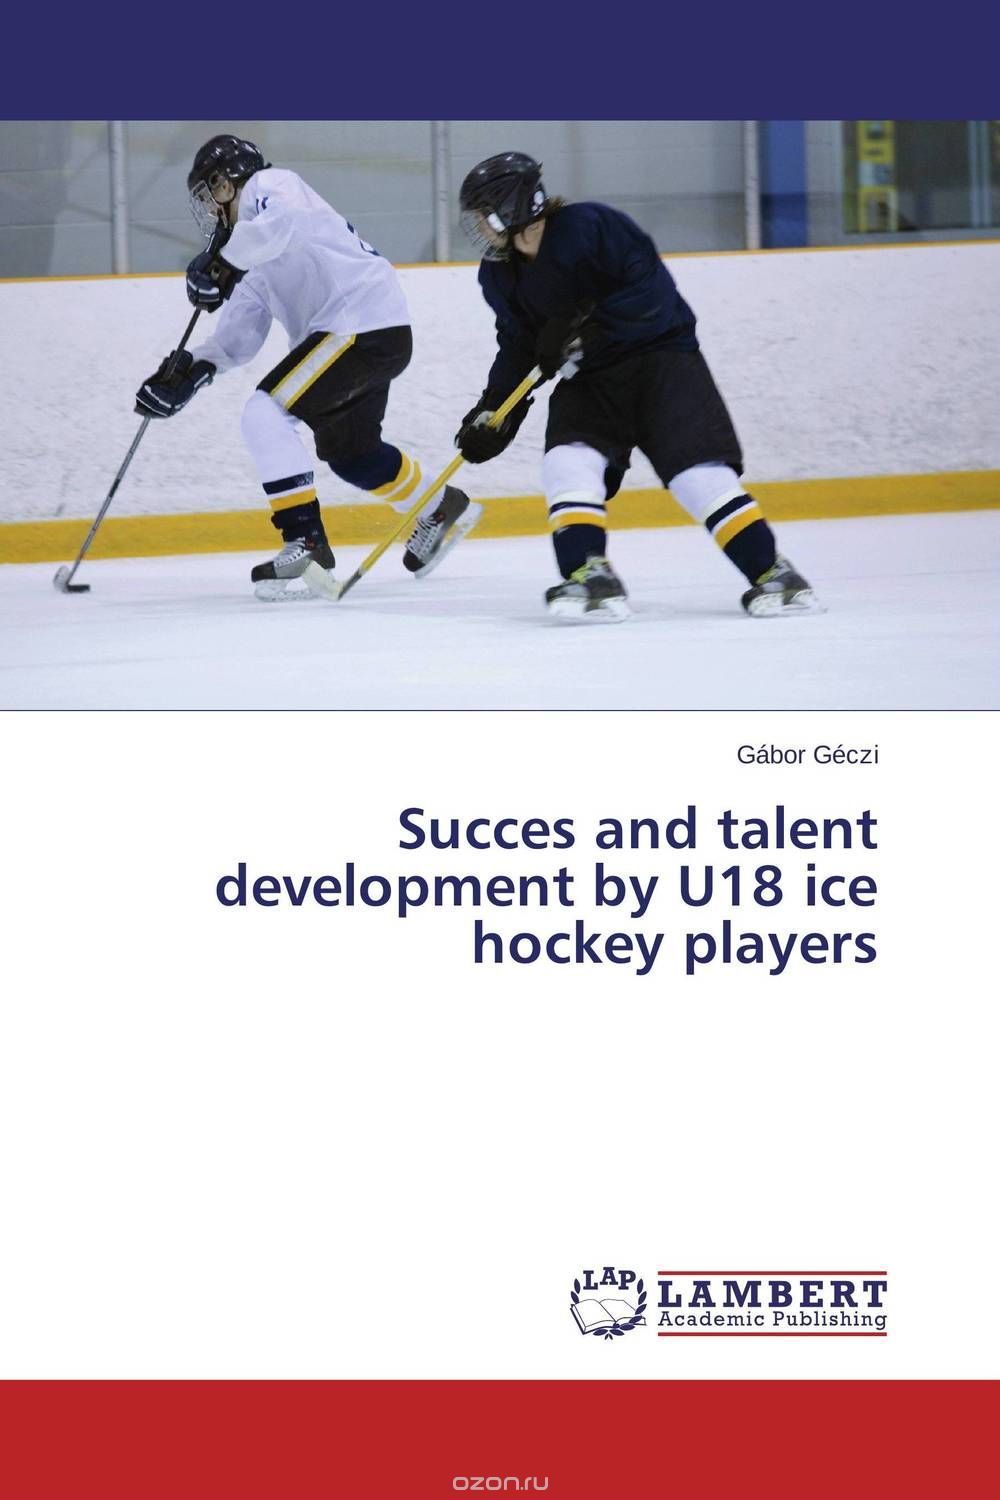 Скачать книгу "Succes and talent development by U18 ice hockey players"